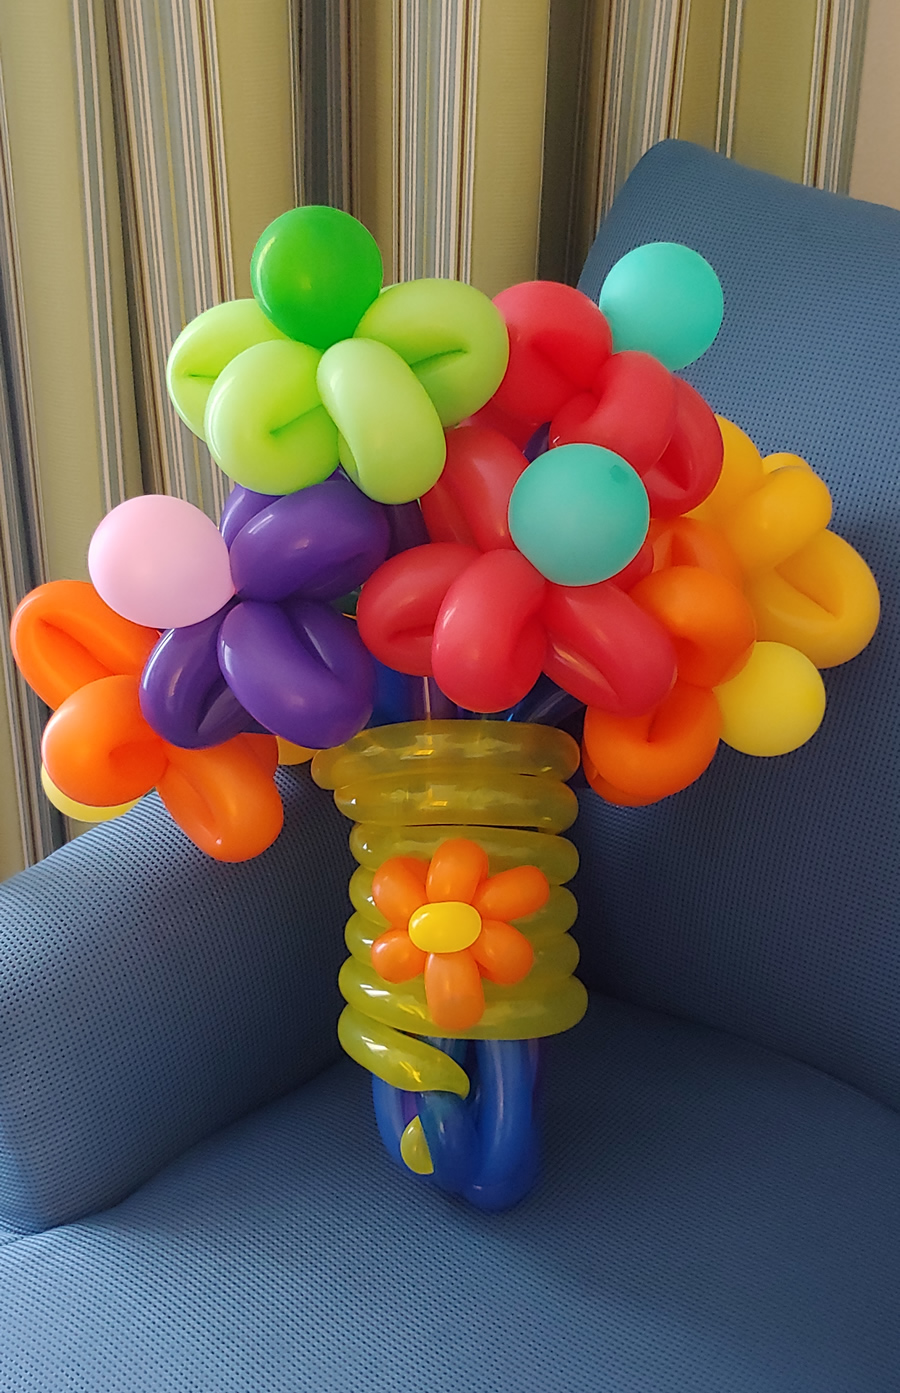 balloon-bouquet-conrad-wieloch